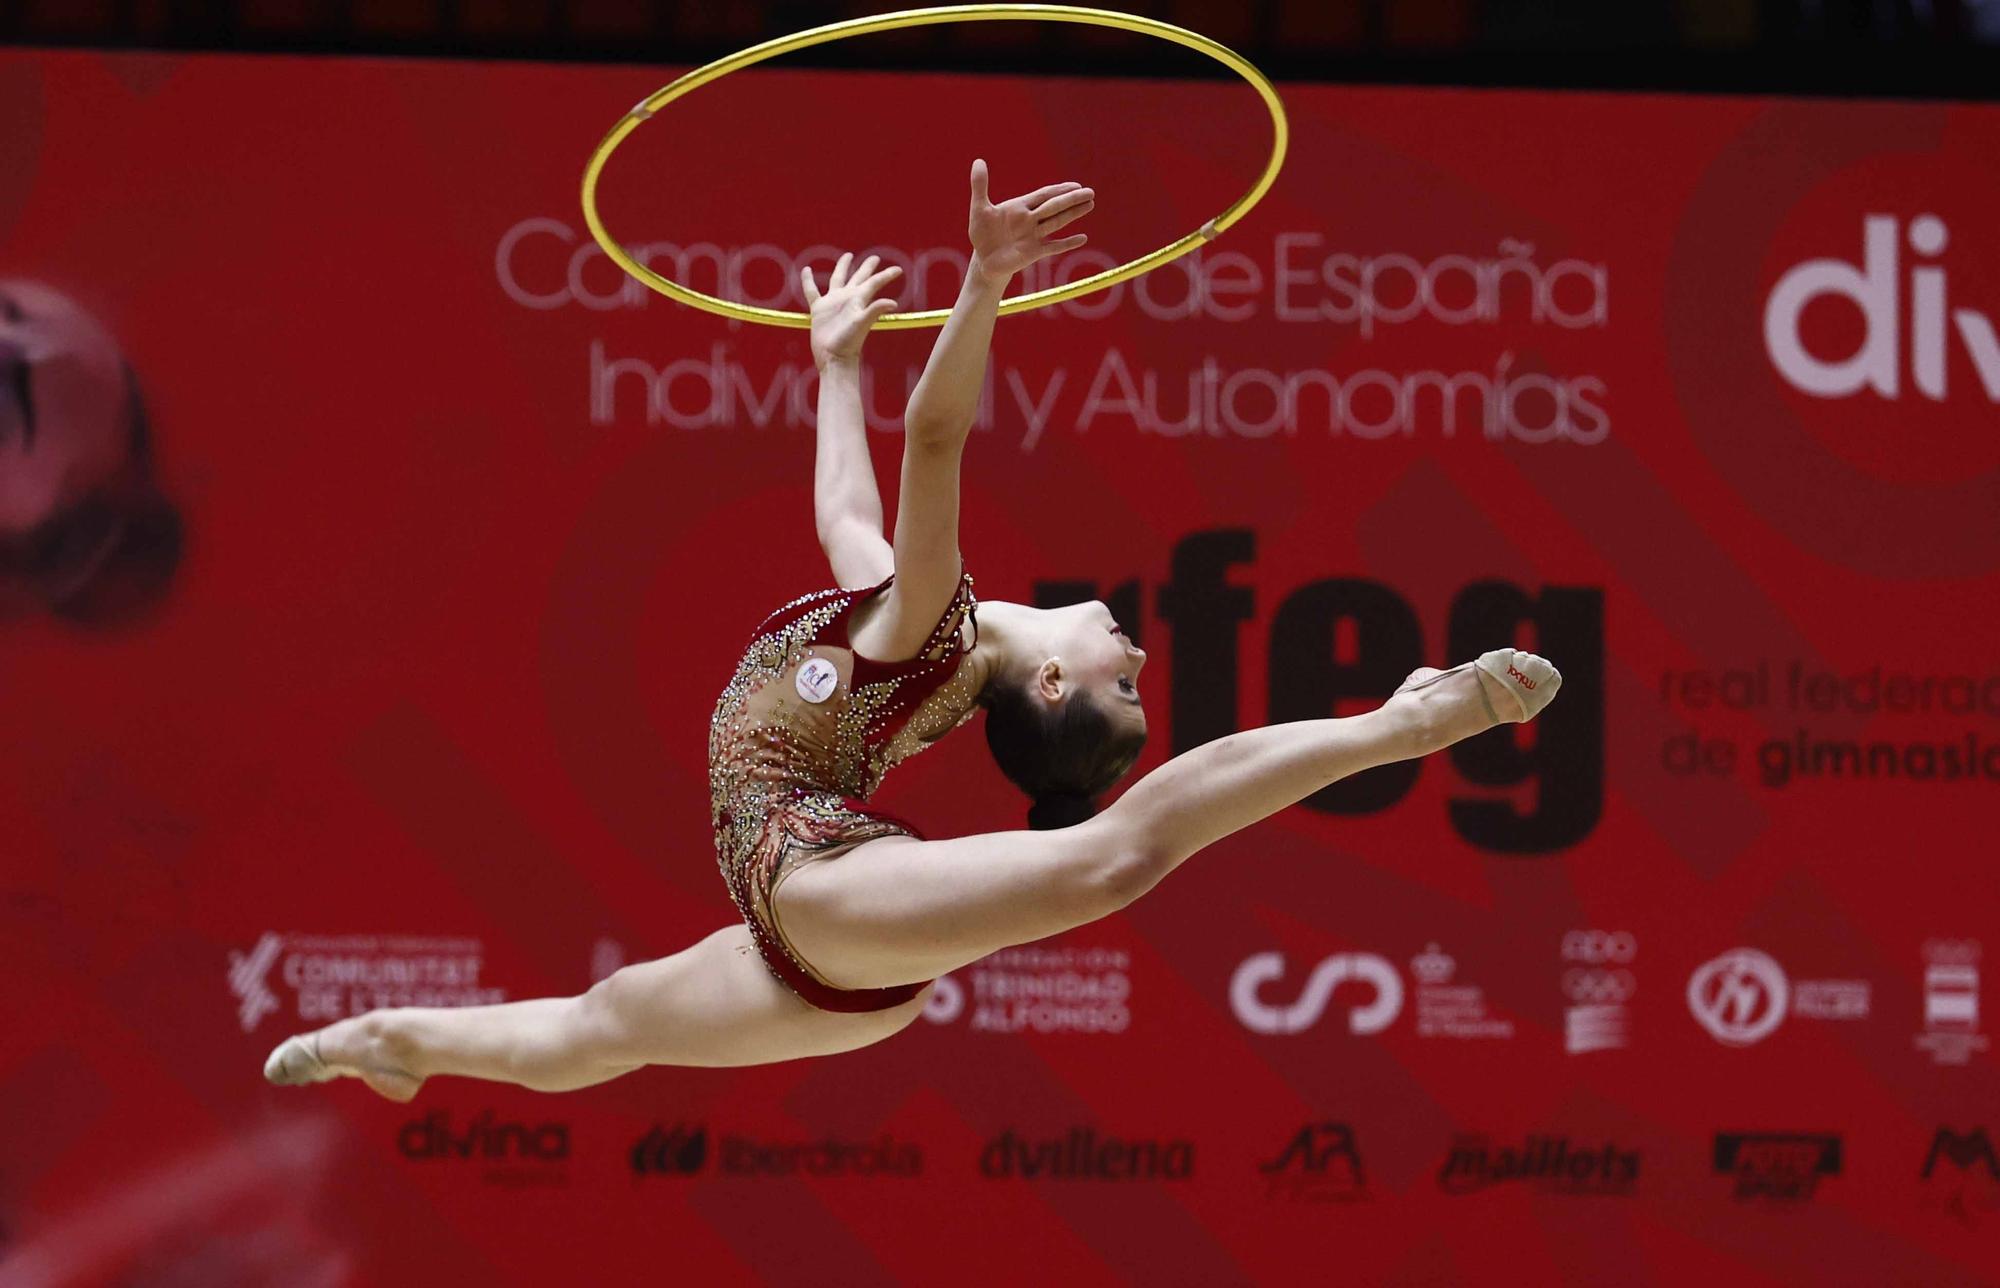 Campeonato de España de Gimnasia RFEG